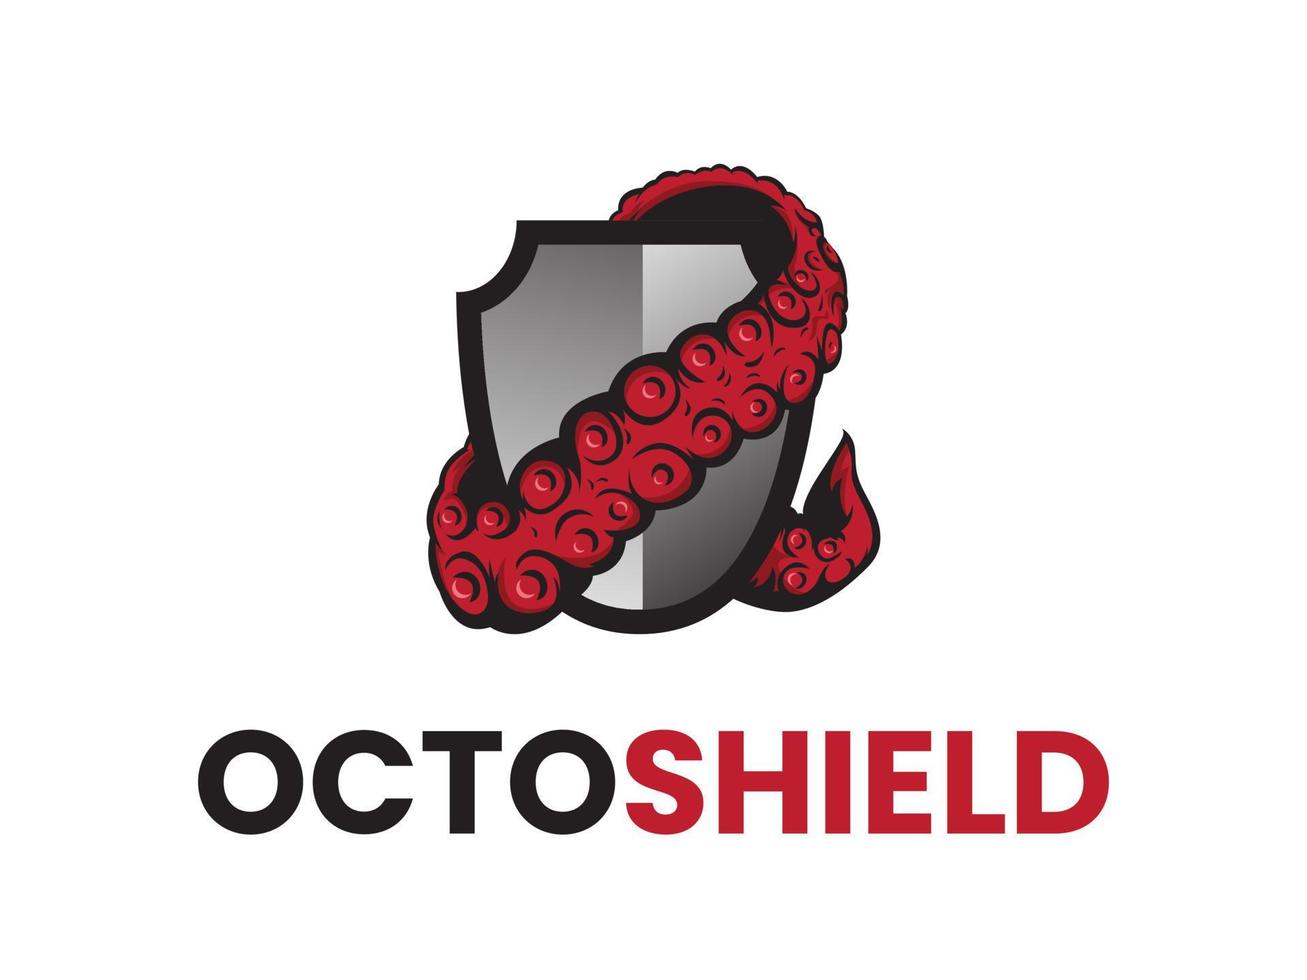 Octopus-Schild-Logo-Design vektor